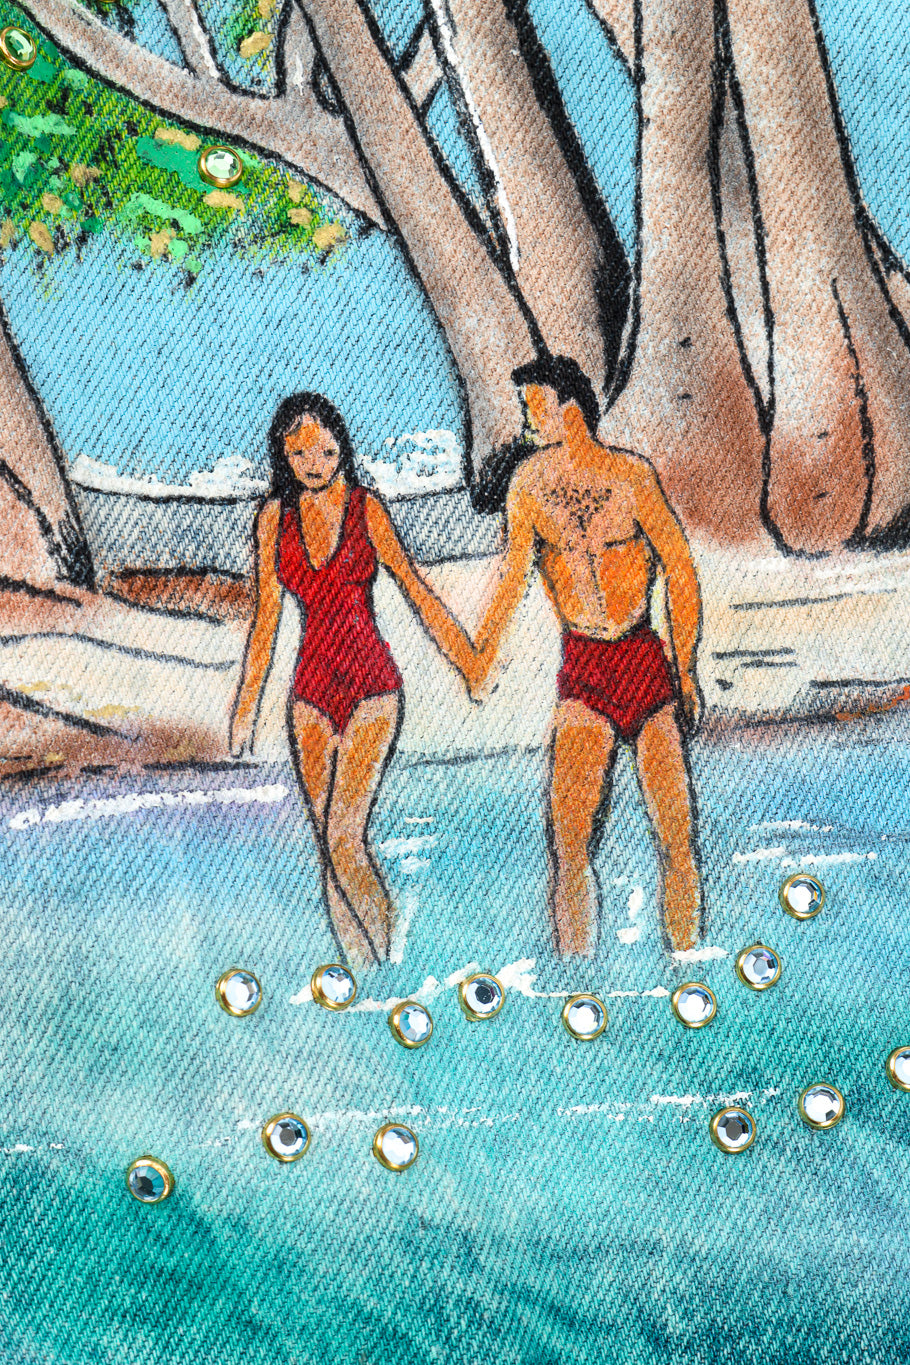 Vintage Tony Alamo Florida Denim Jacket illustration of couple on beach closeup @Recessla